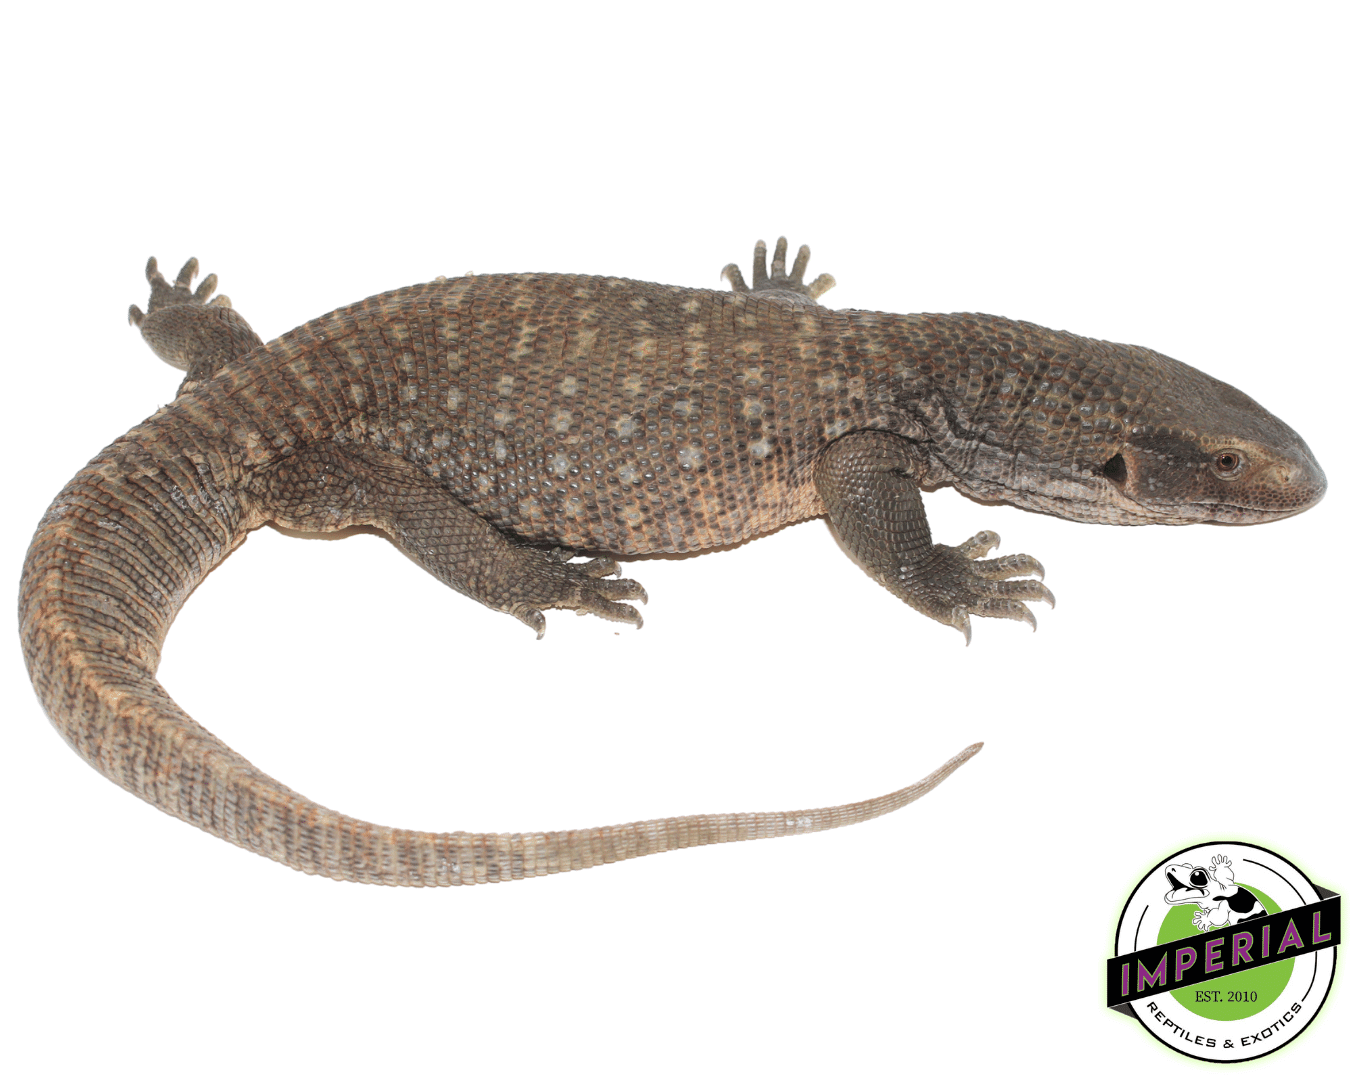 savannah monitor lizard for sale, buy reptiles online